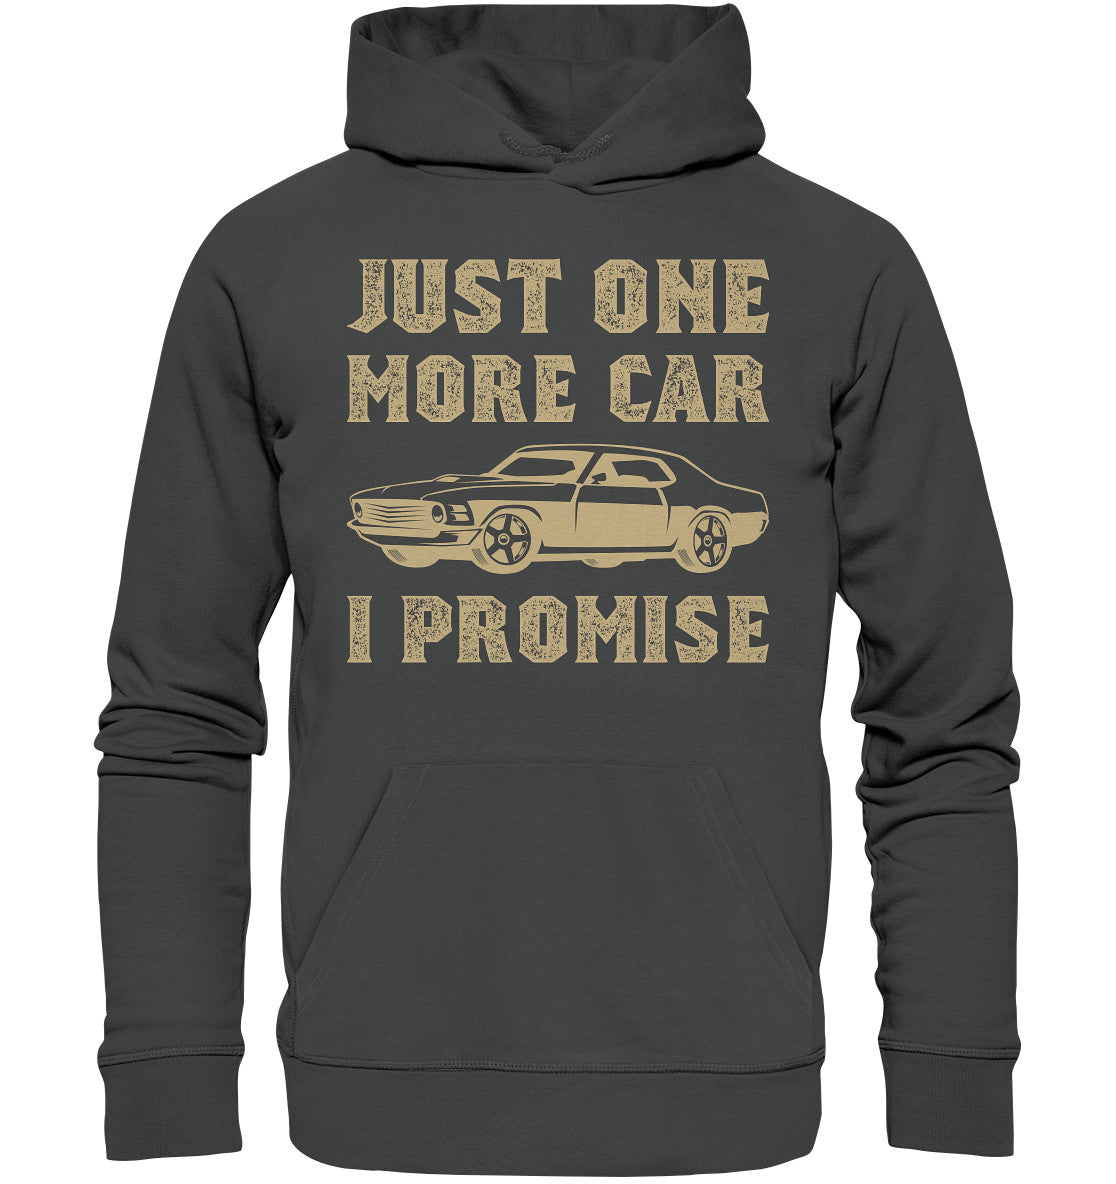 Just one more car...  - Organic   Hoodie